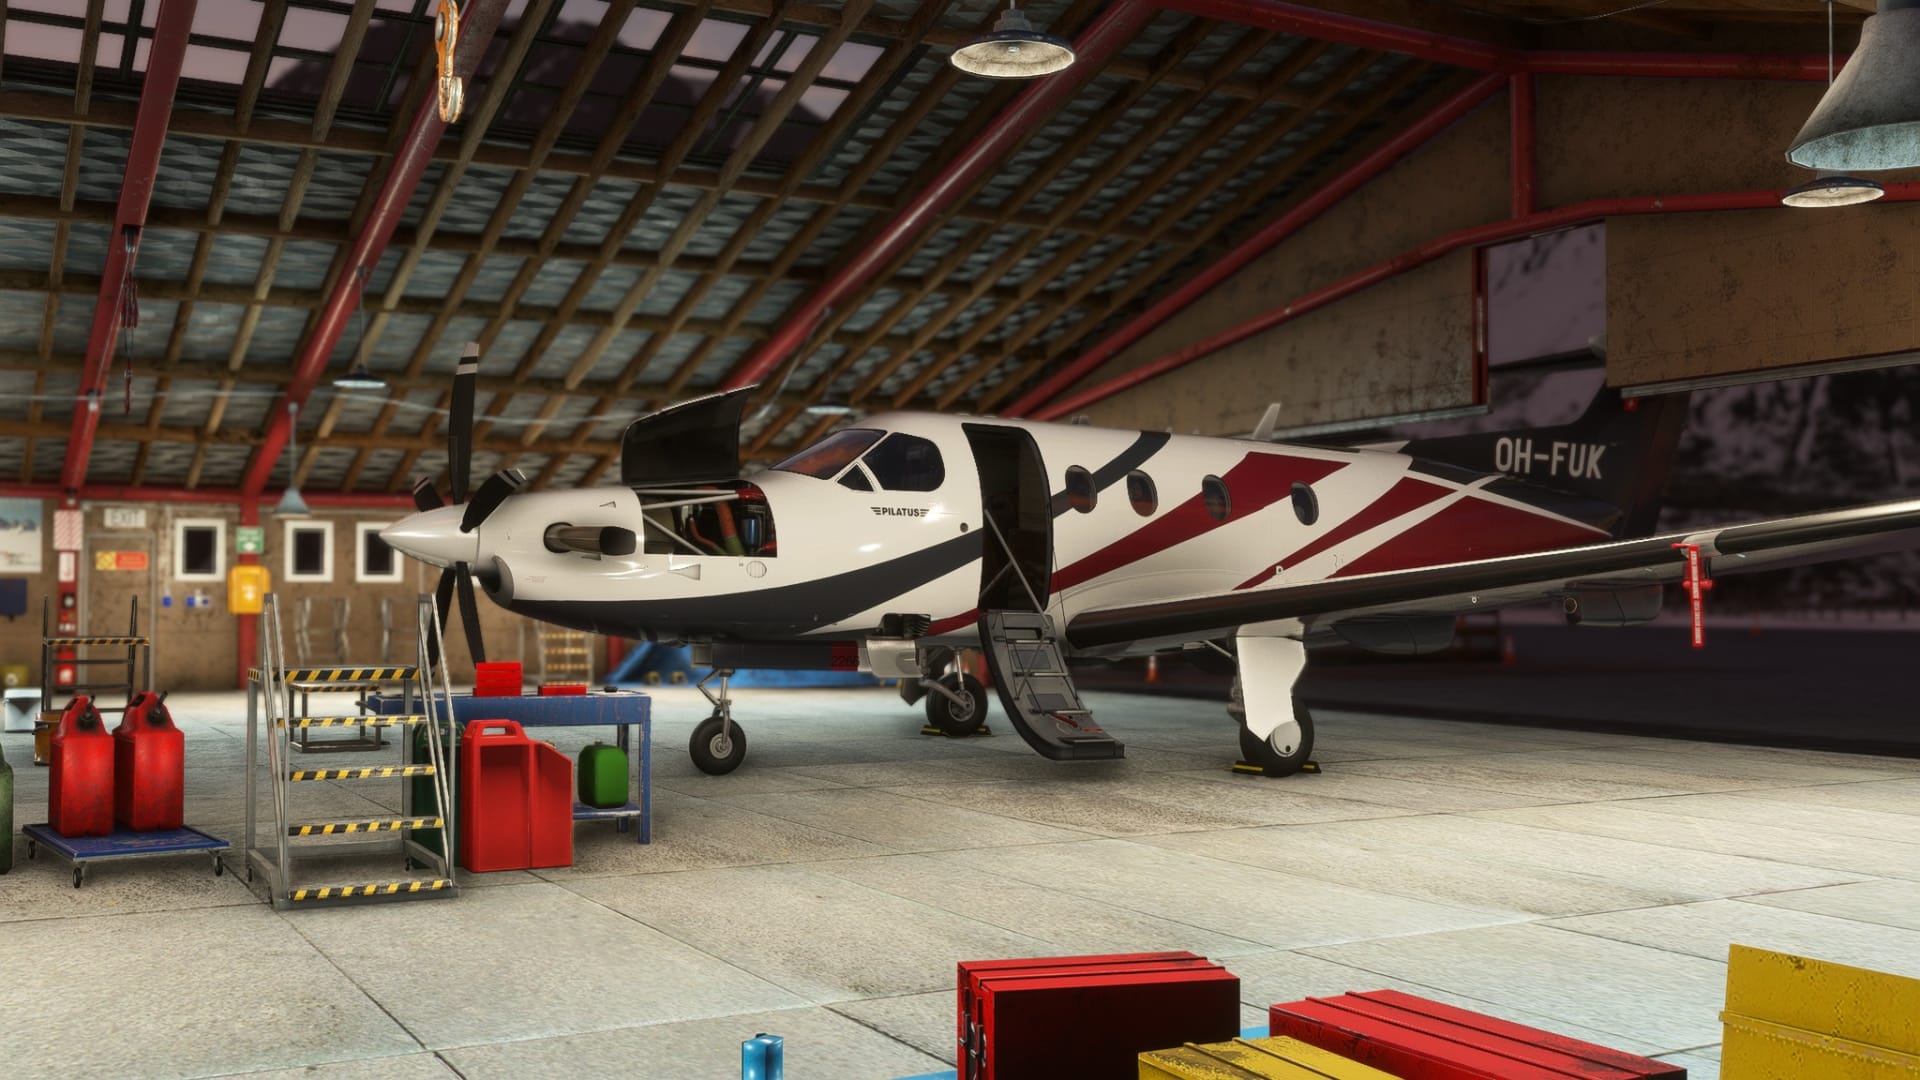 Microsoft Flight Simulator Is Getting… a Buggy? Pilatus PC-12 & Van’s RV-8 Get New Screenshots